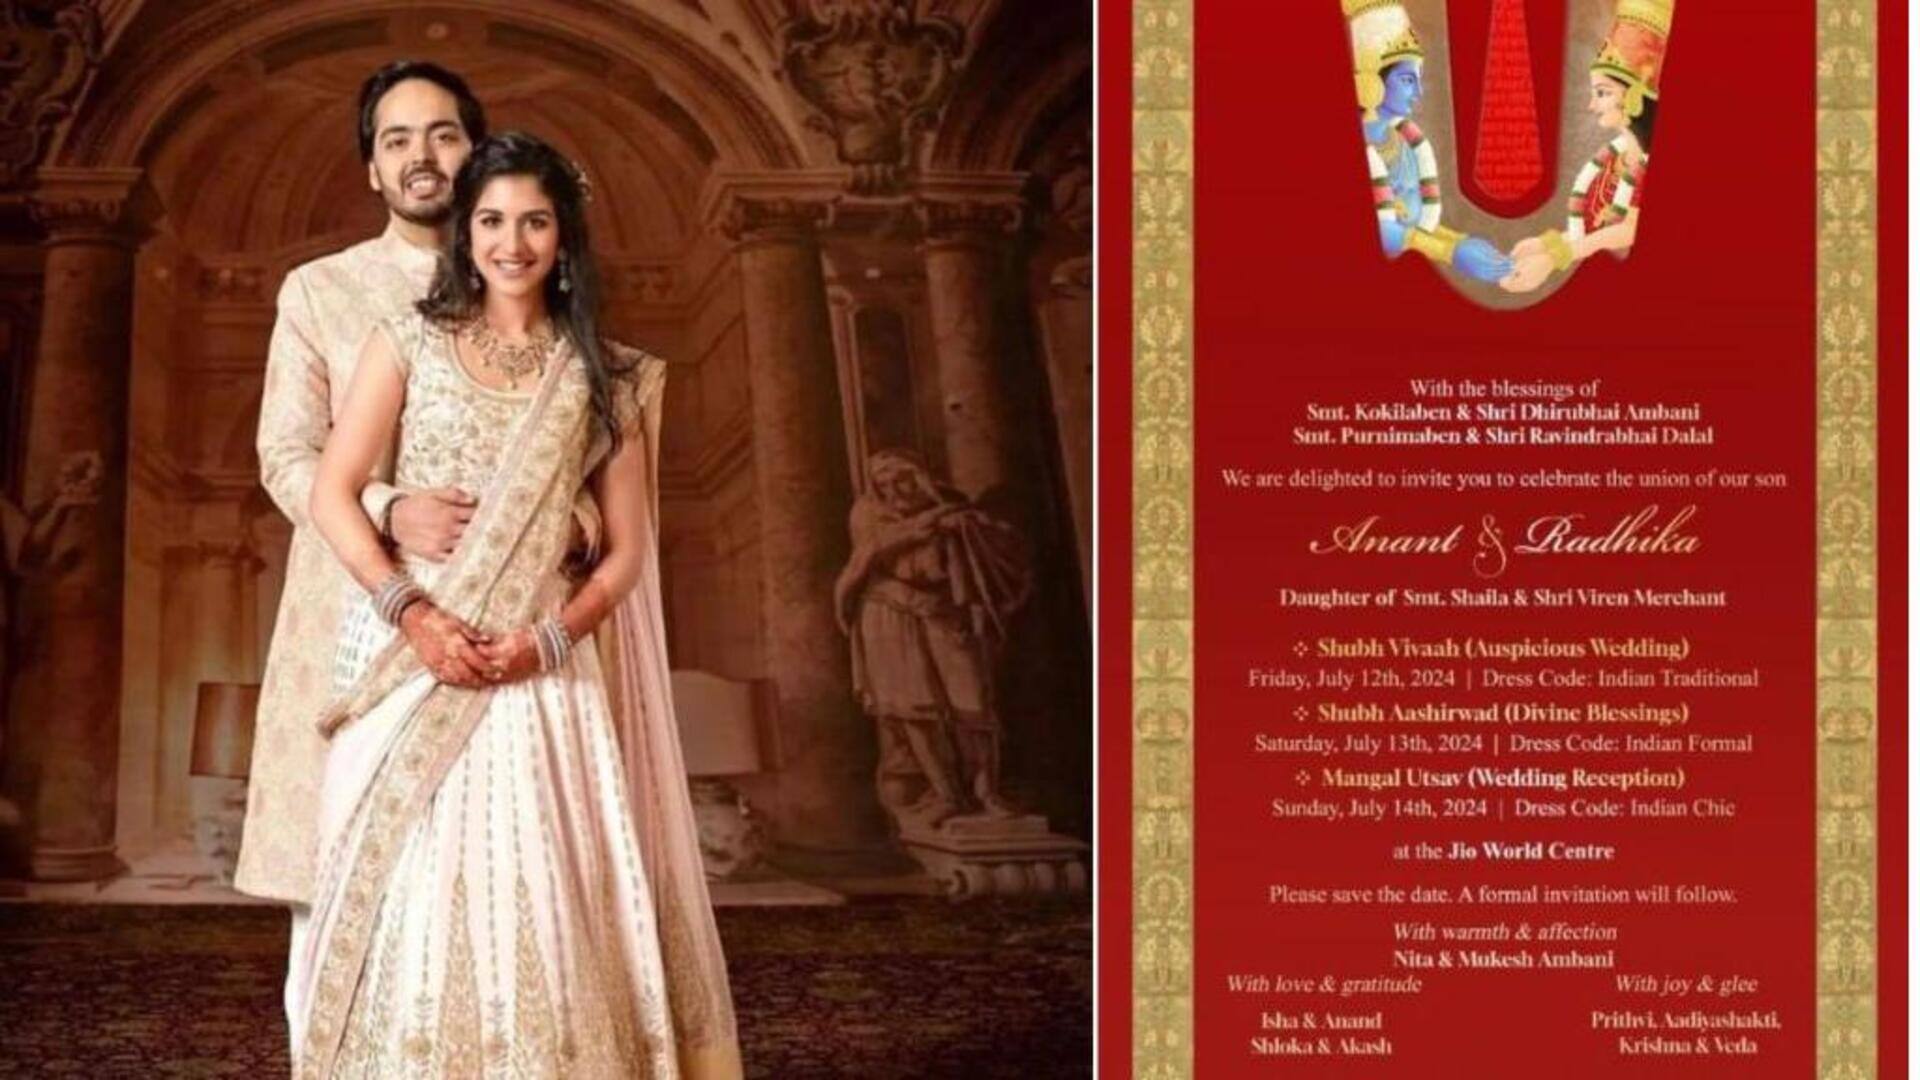 Anant-Radhika Wedding: జూలై 12న ముంబైలో అనంత్ అంబానీ, రాధిక మర్చంట్ వివాహం, జూలై 14న రిసెప్షన్ 